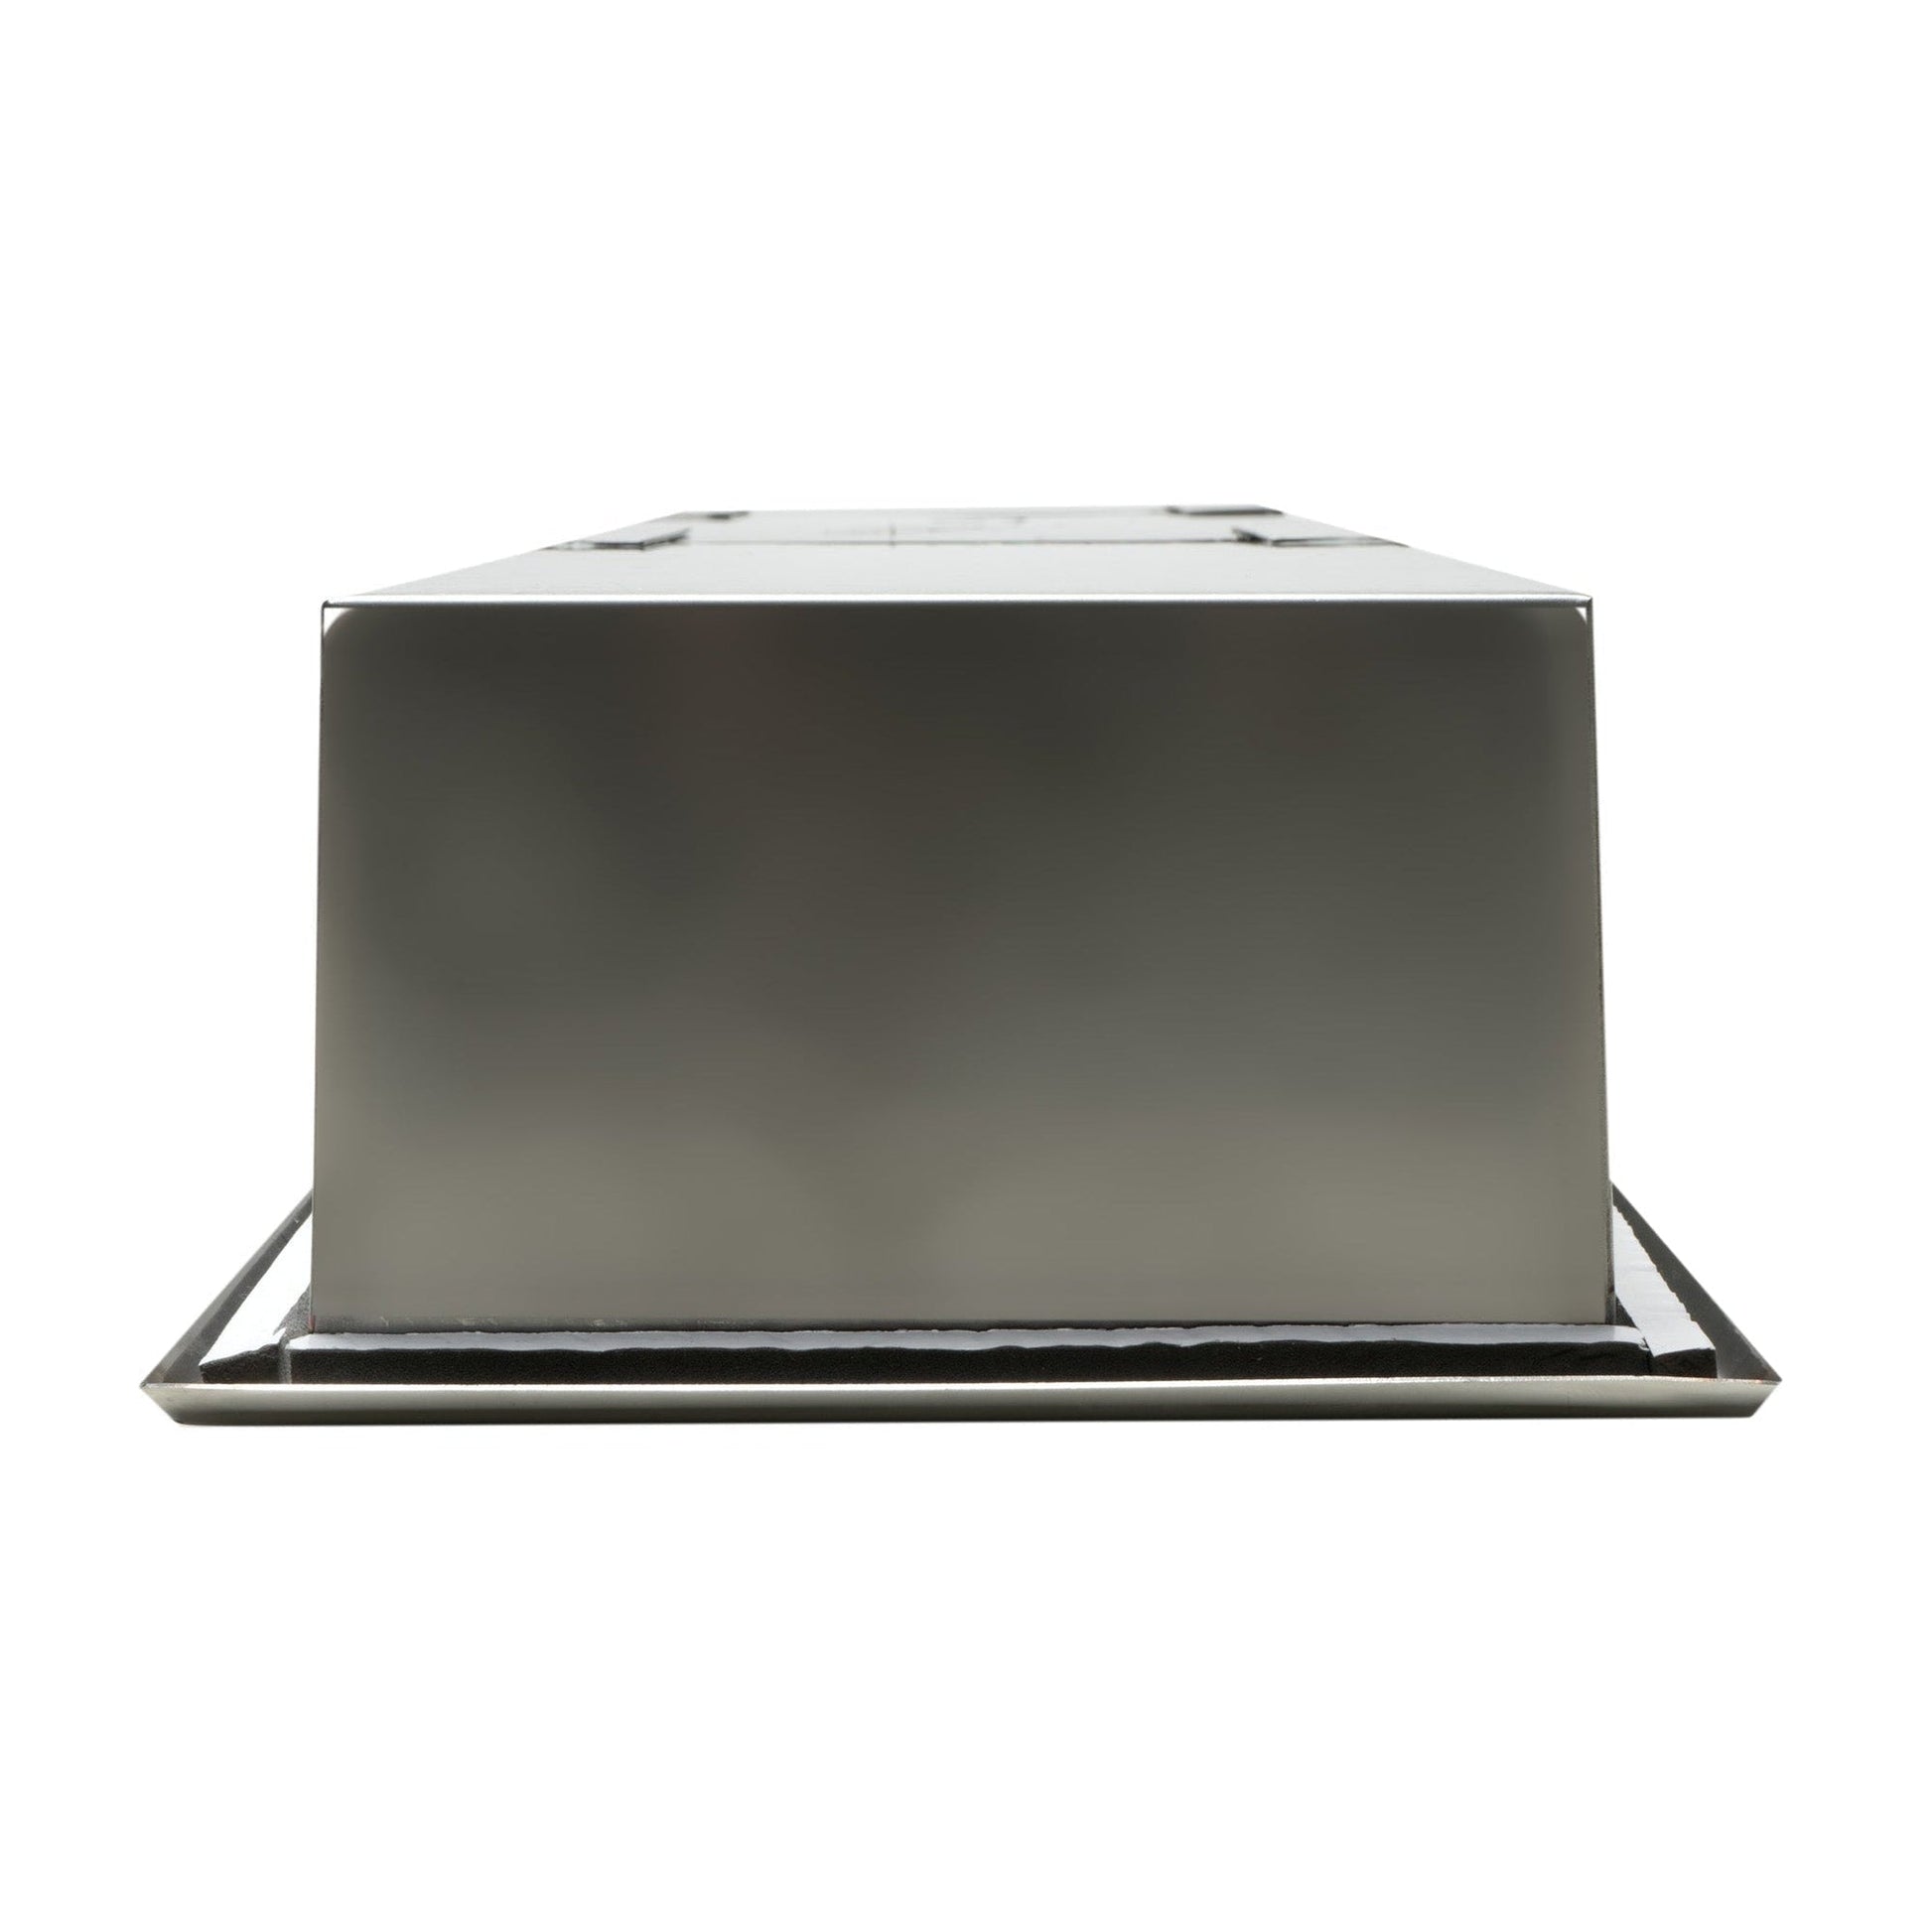 ALFI ALFI brand 8 x 36 Polished Stainless Steel Vertical Triple Shelf Bath  Shower Niche